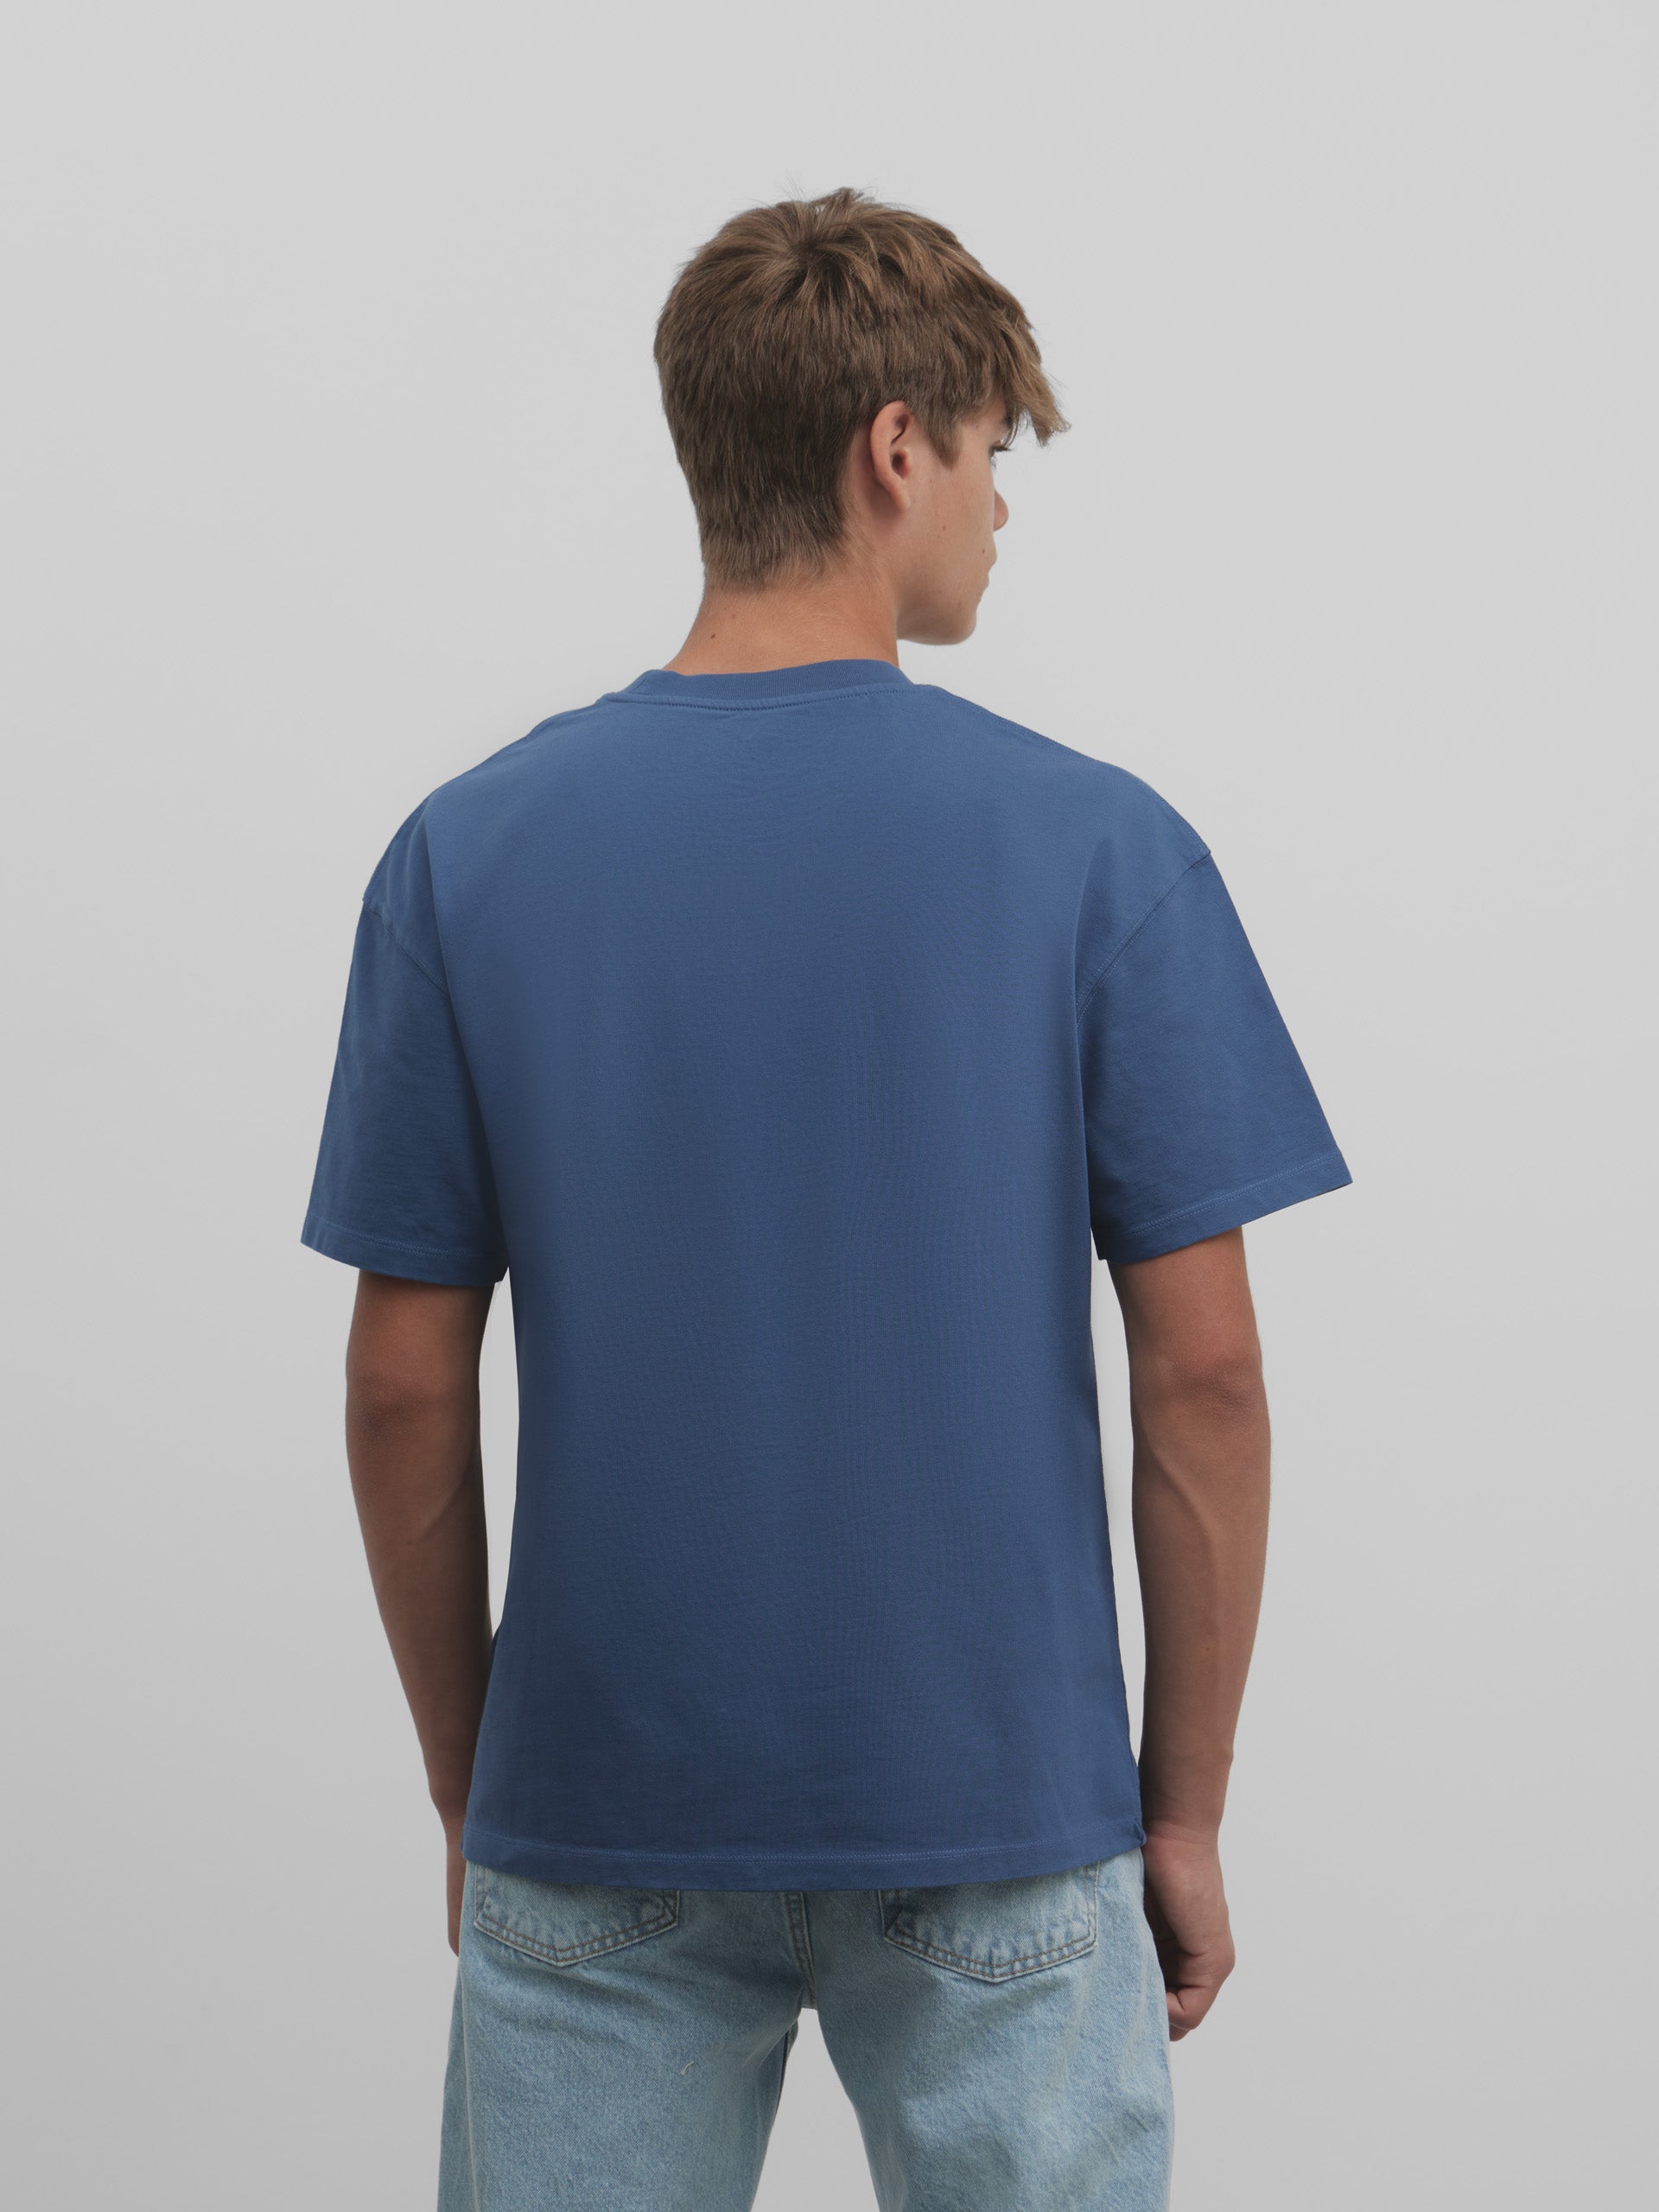 Camiseta silbon special fit azul